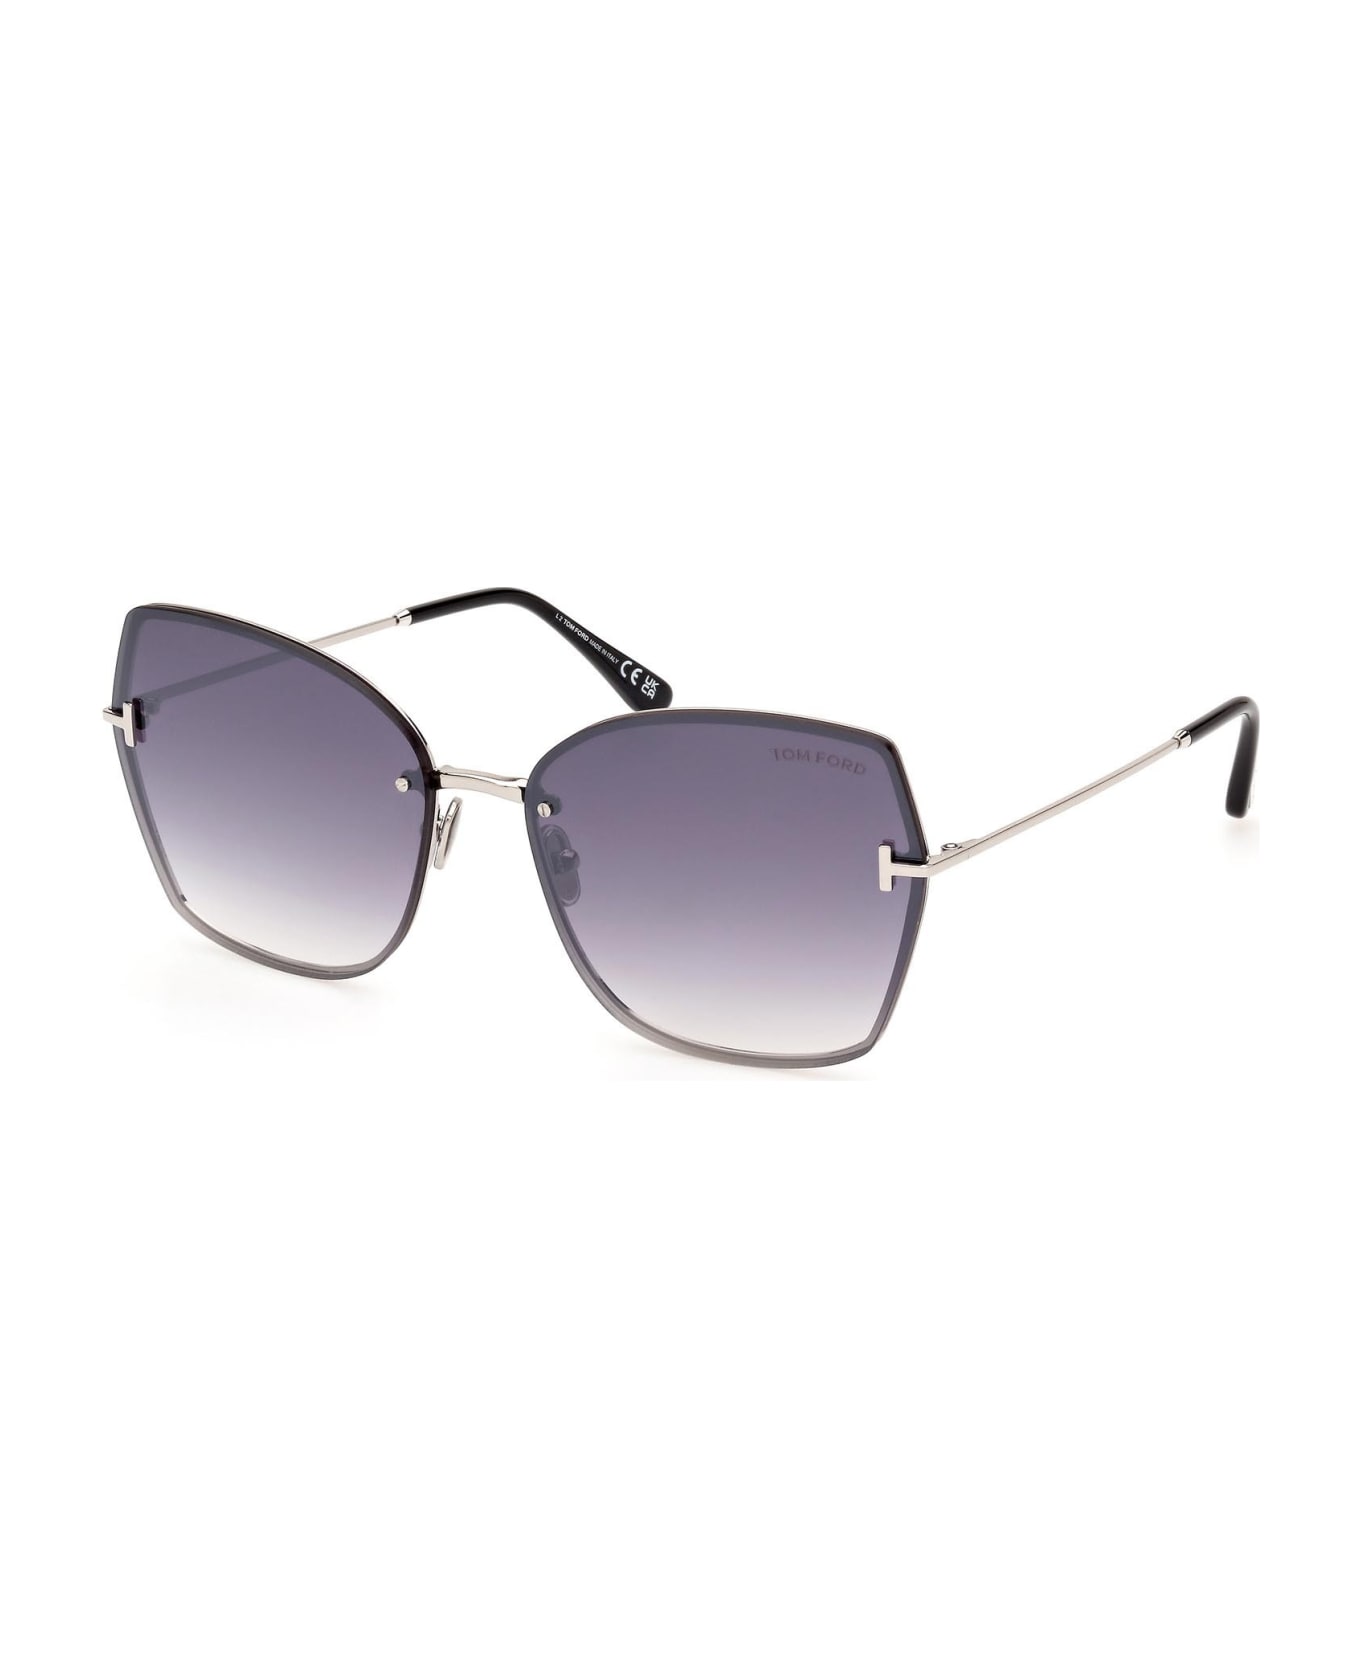 Tom Ford Eyewear Sunglasses - Silver/Grigio サングラス